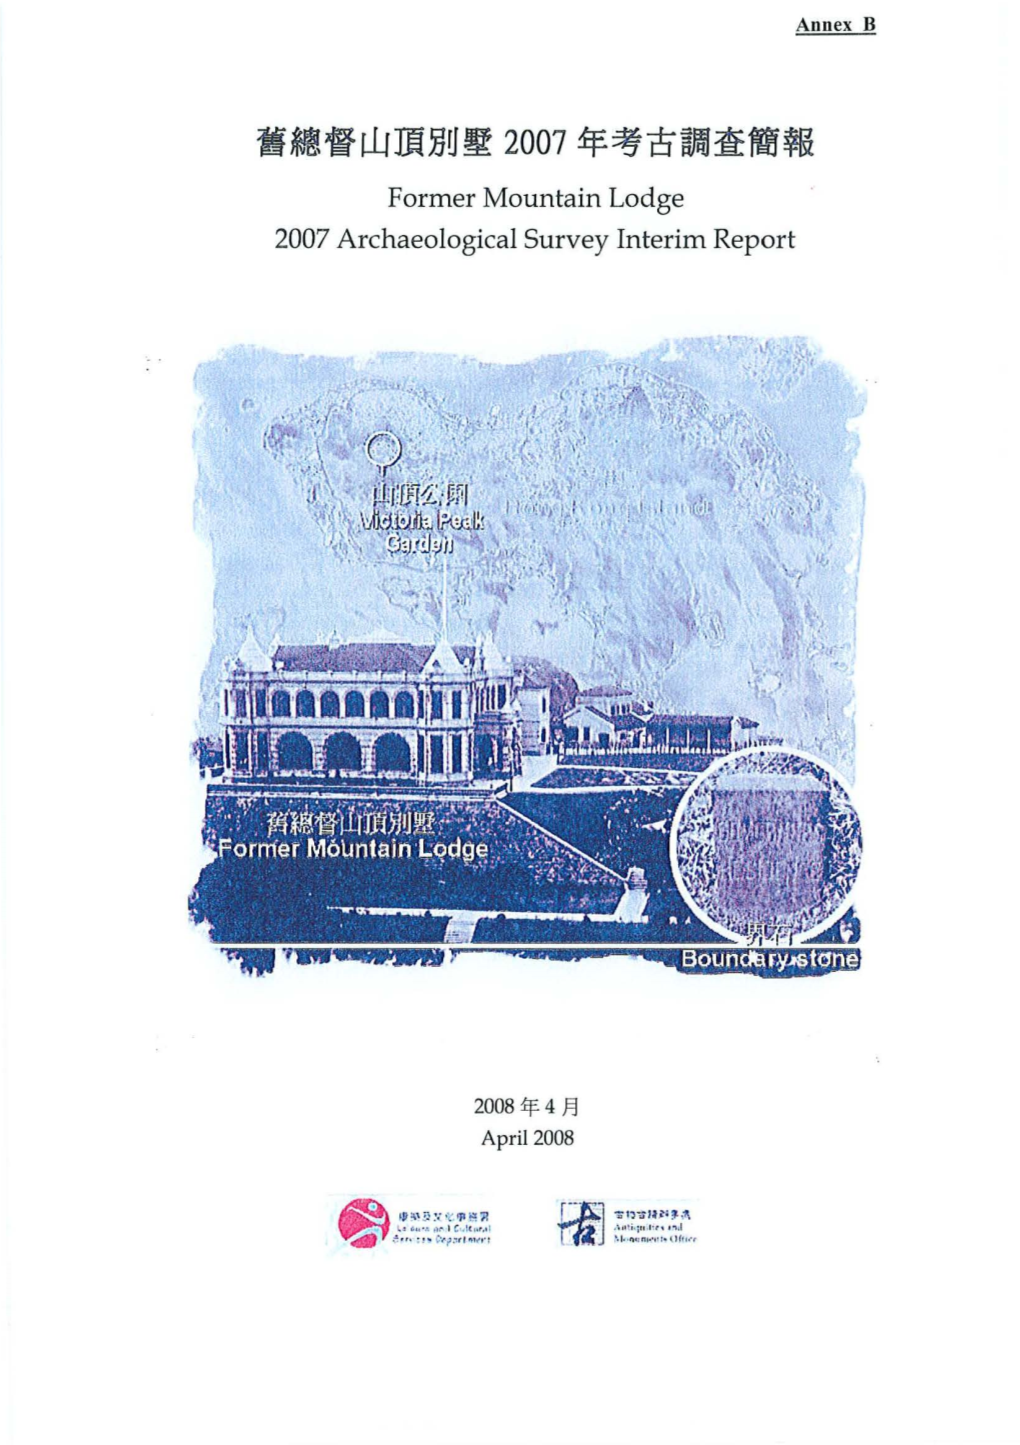 Former Mountain Lodge 2007 Archaeological Survey Interim Report